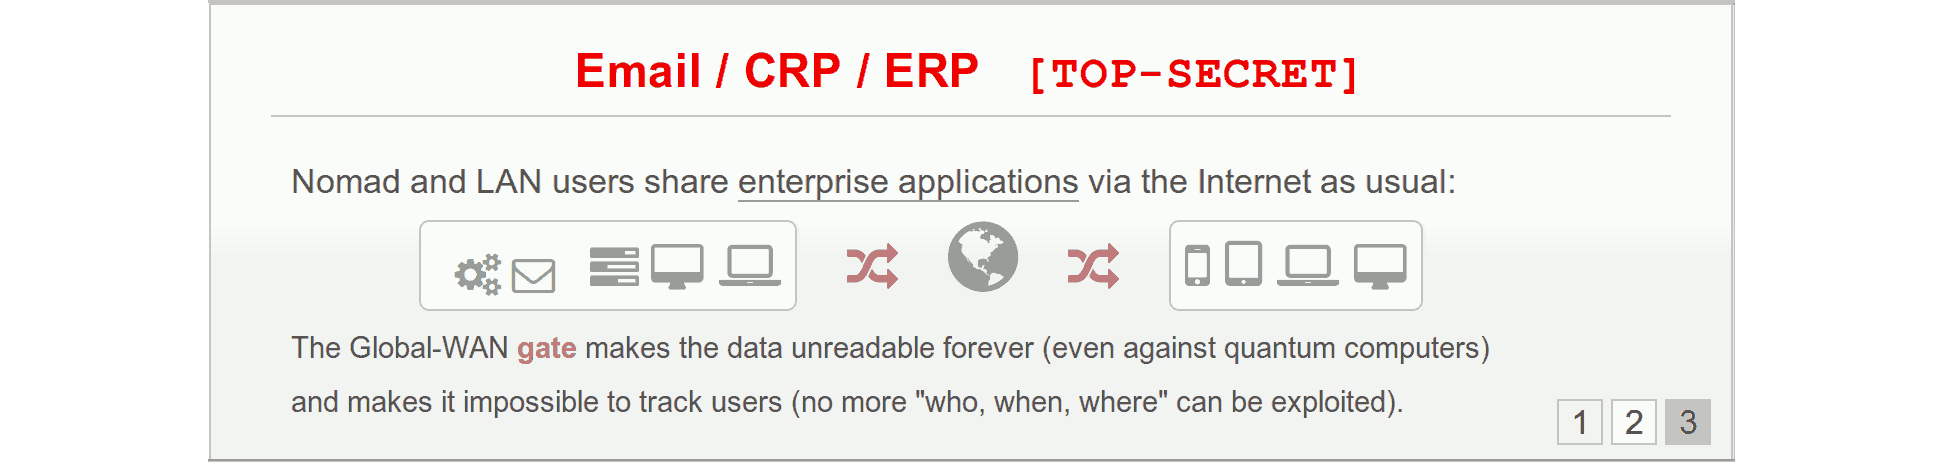 Email / ERP / CRP [Top-Secret]